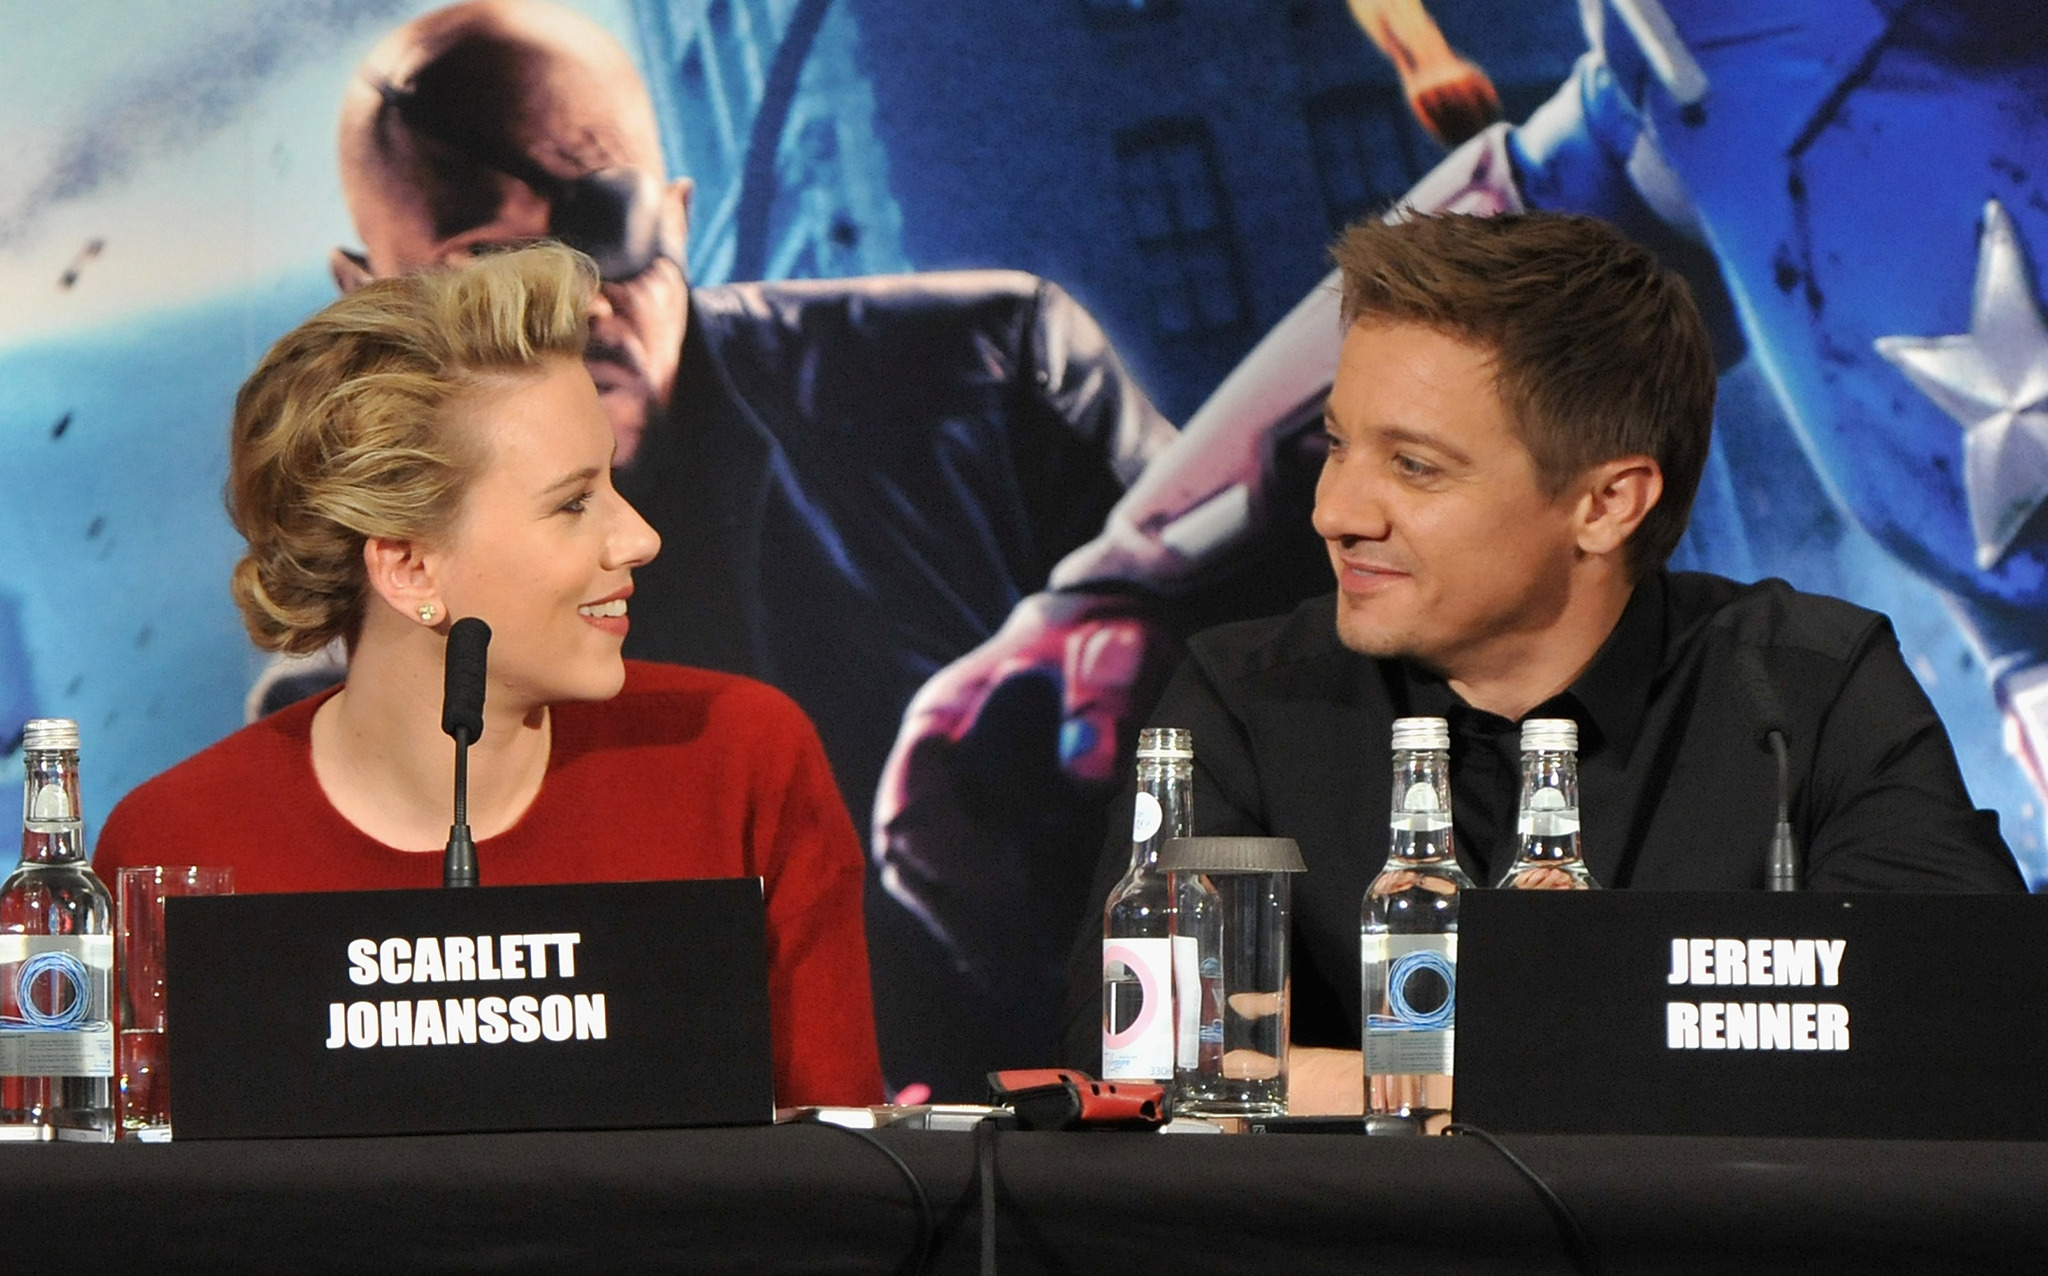 Scarlett Johansson and Jeremy Renner at event of Kersytojai (2012)